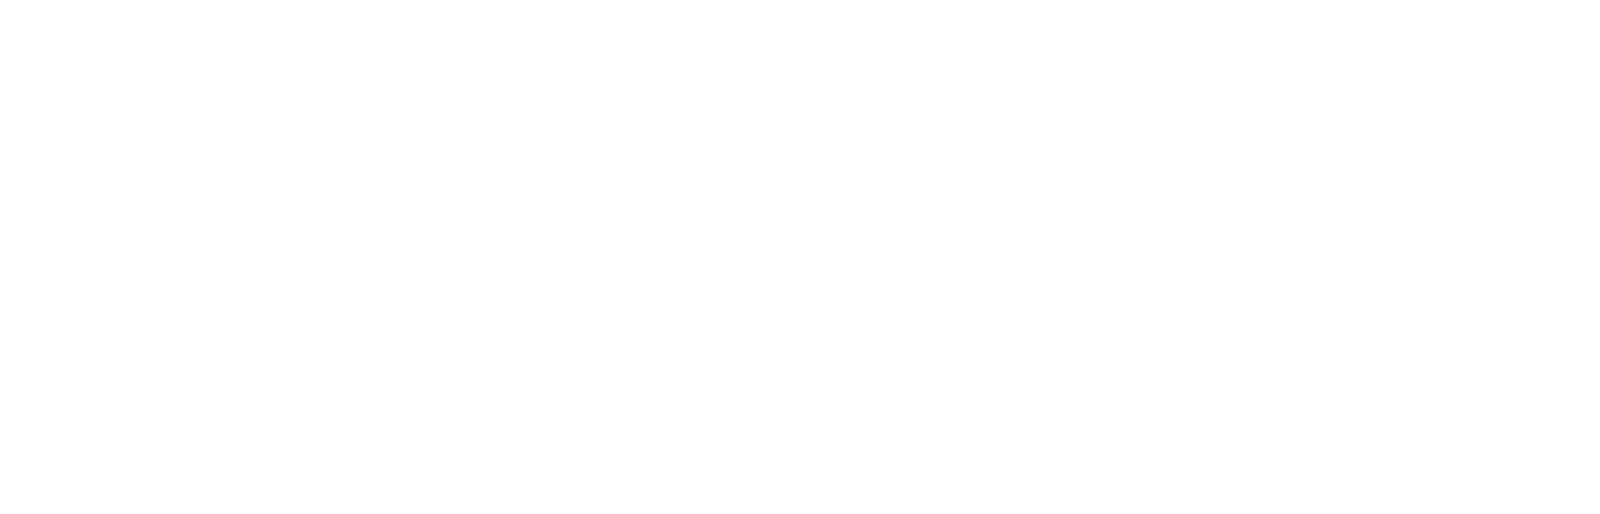 Archer Contingent Energy Risk